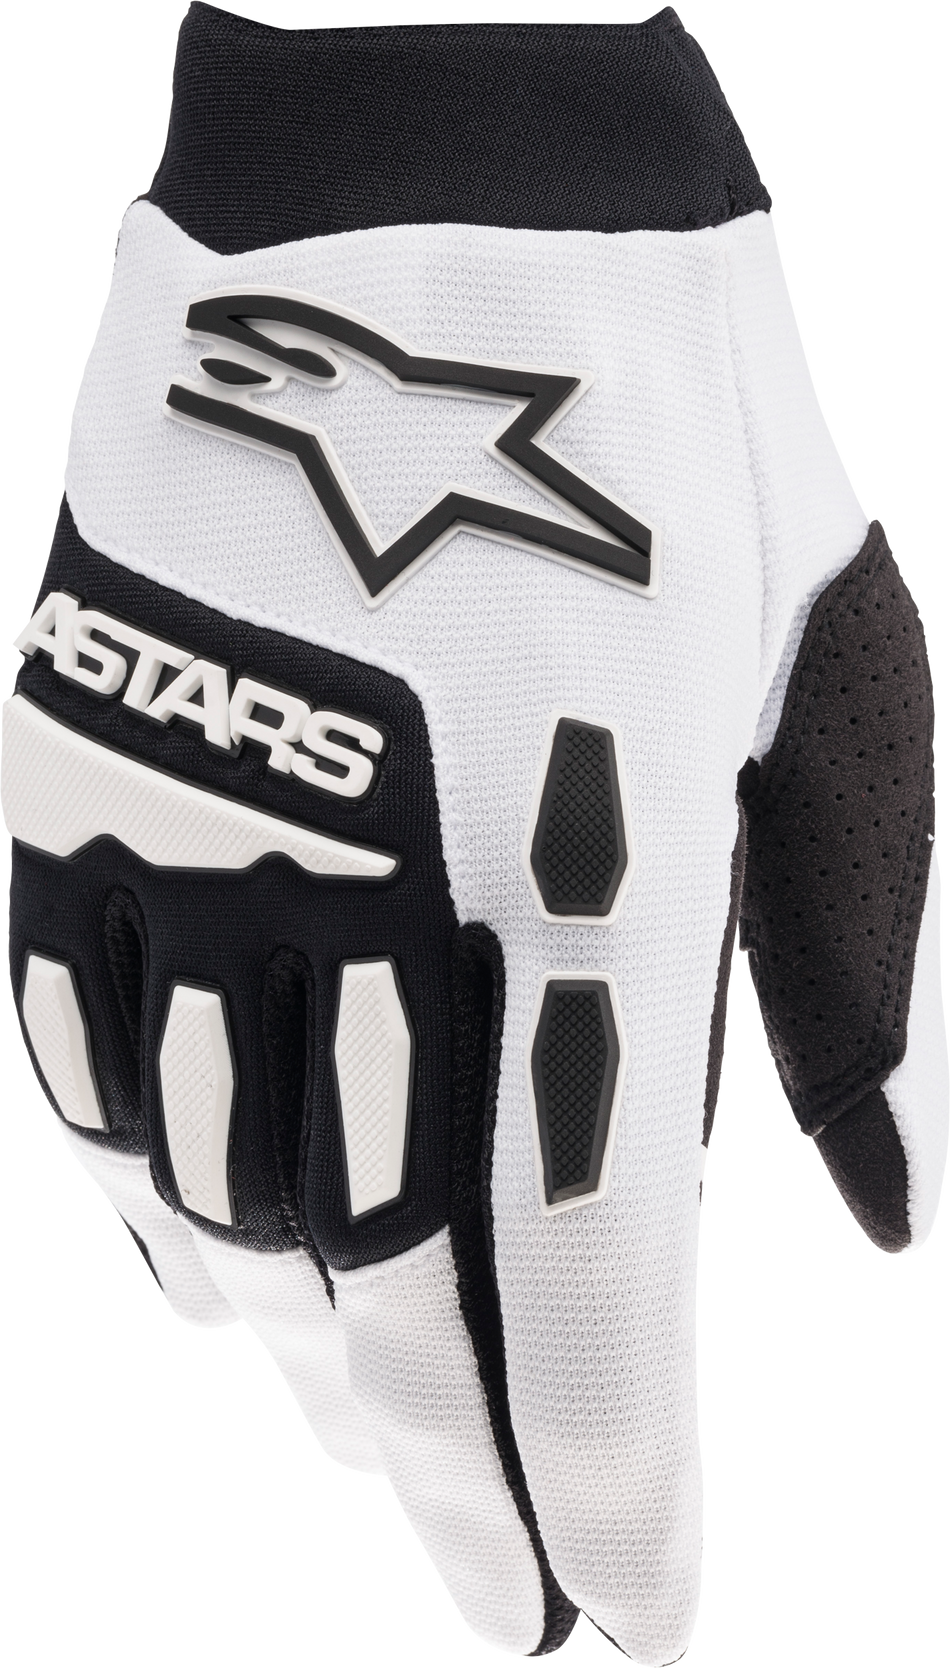 ALPINESTARS Youth Full Bore Gloves White/Black Y3xs 3543622-21-3XS